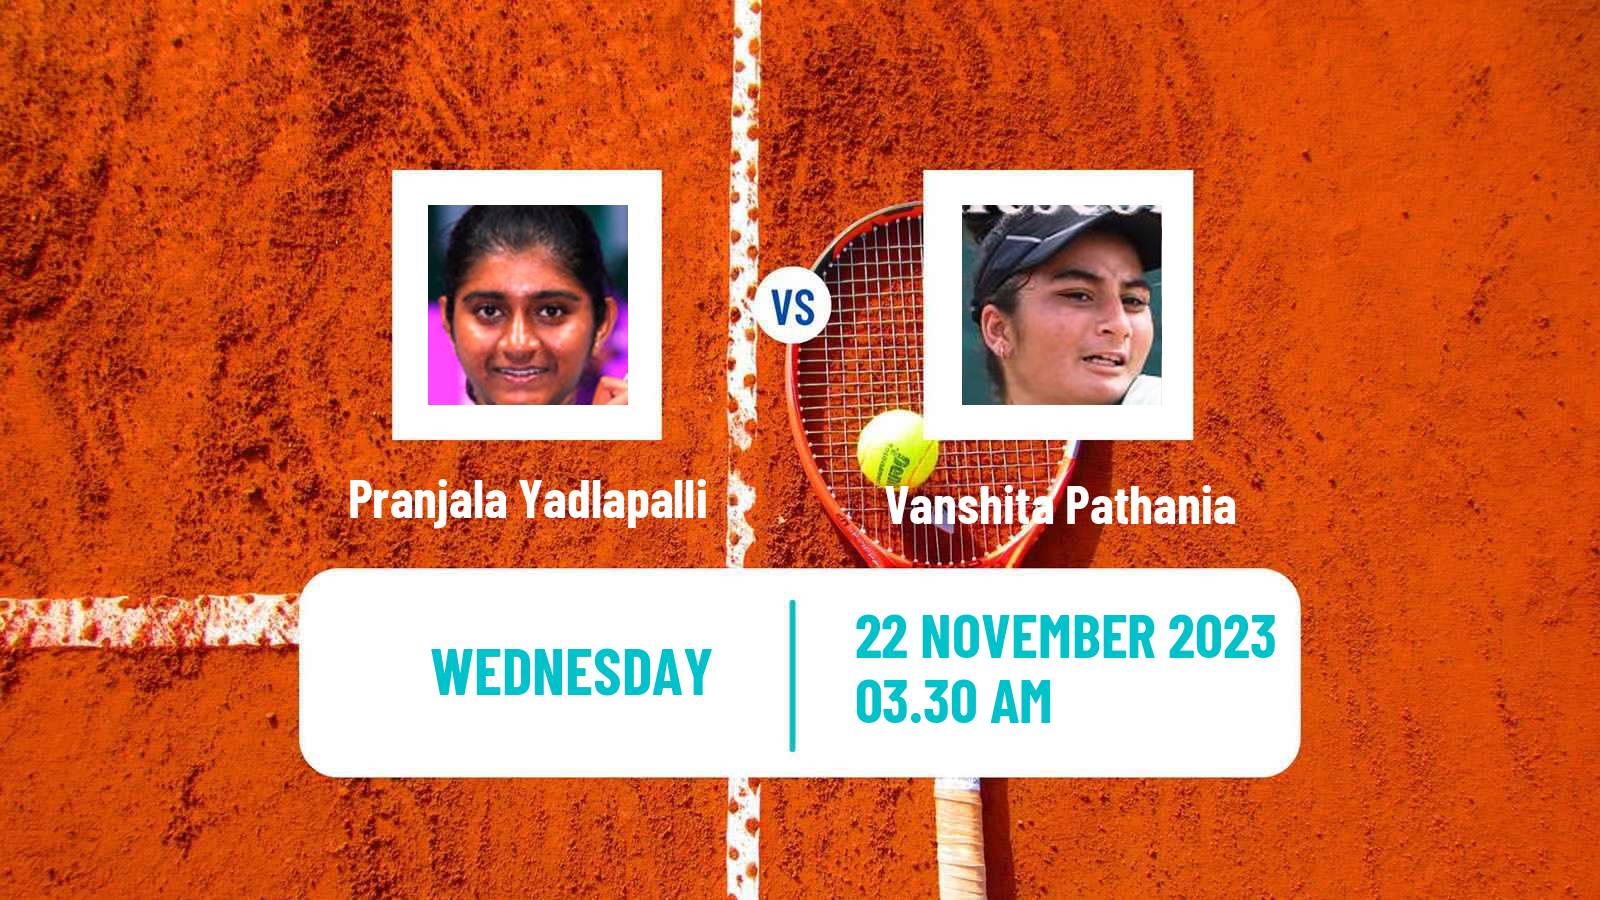 Tennis ITF W25 Bengaluru 2 Women Pranjala Yadlapalli - Vanshita Pathania